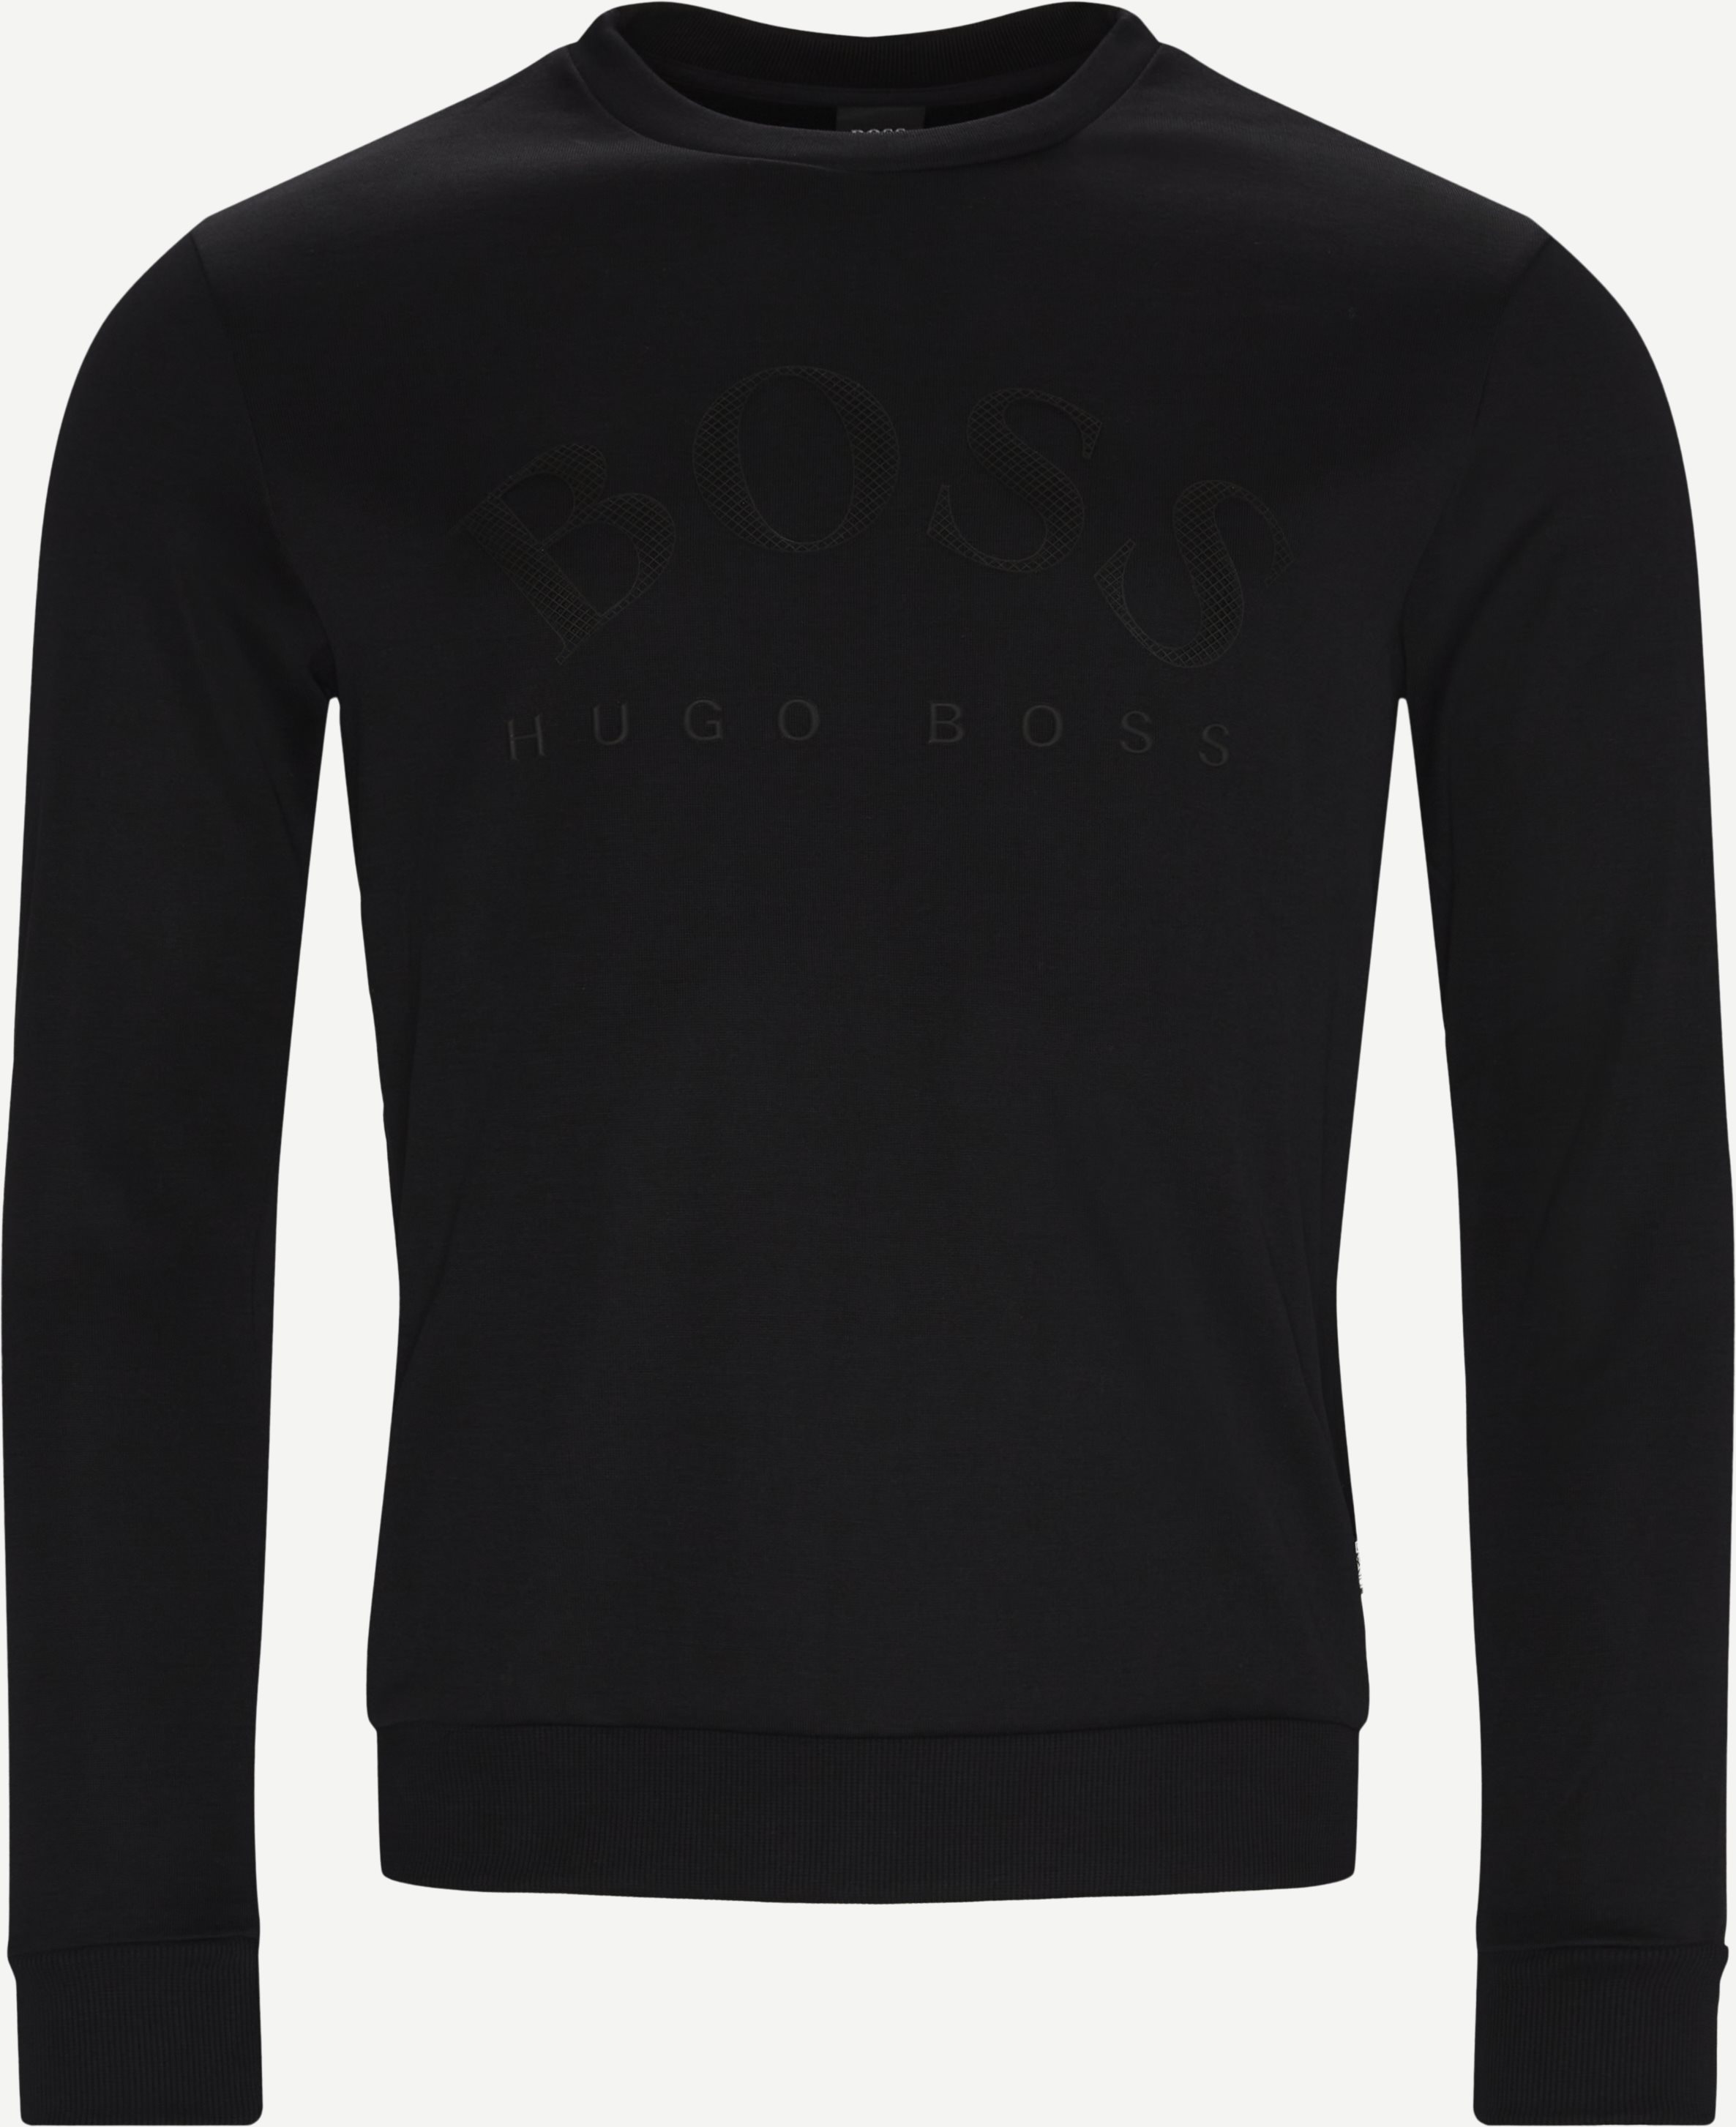 Salbo Sweatshirt - Sweatshirts - Regular fit - Black